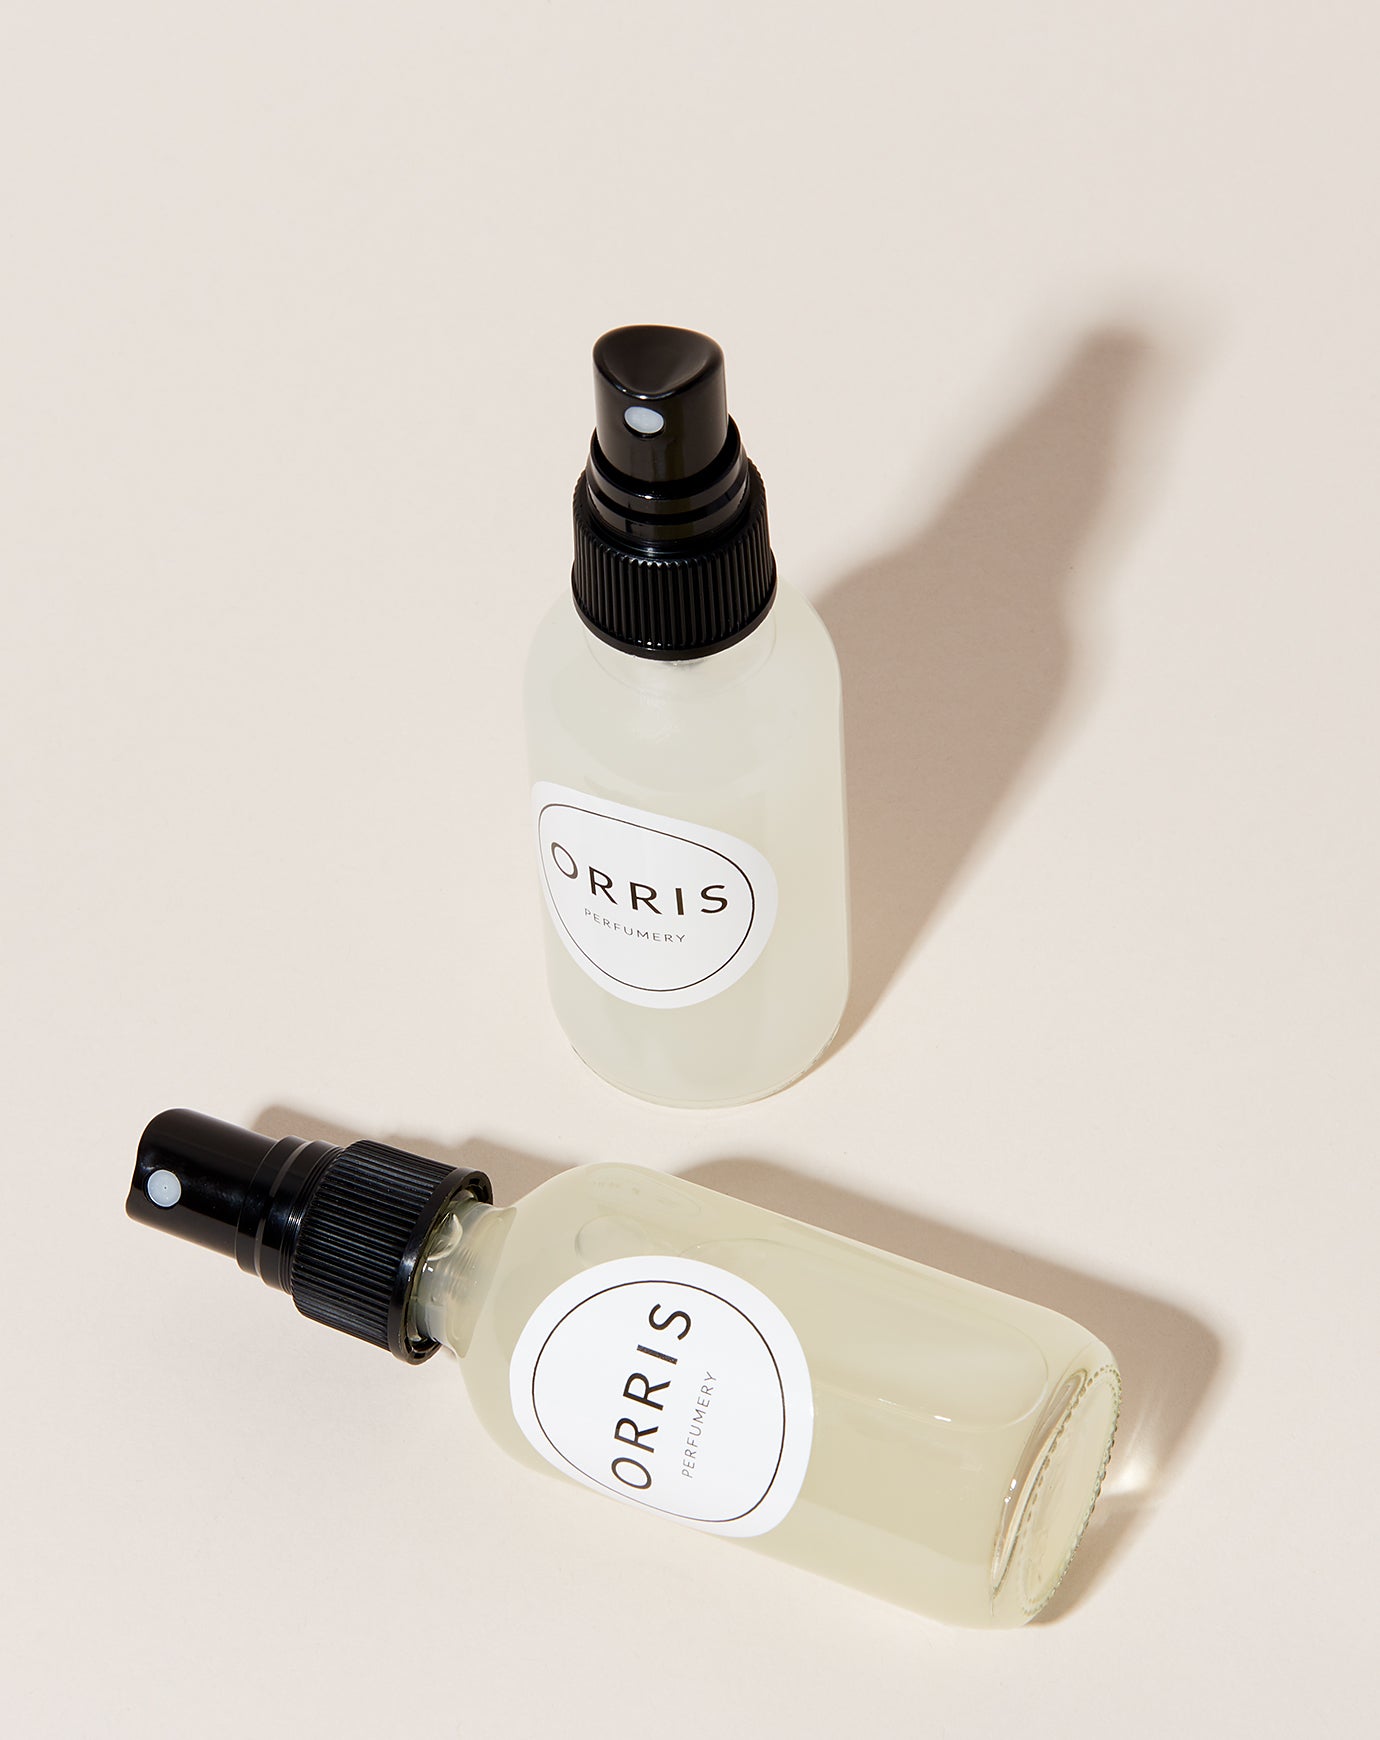 Orris Perfumery Sanitizing Hand Perfume in Joy